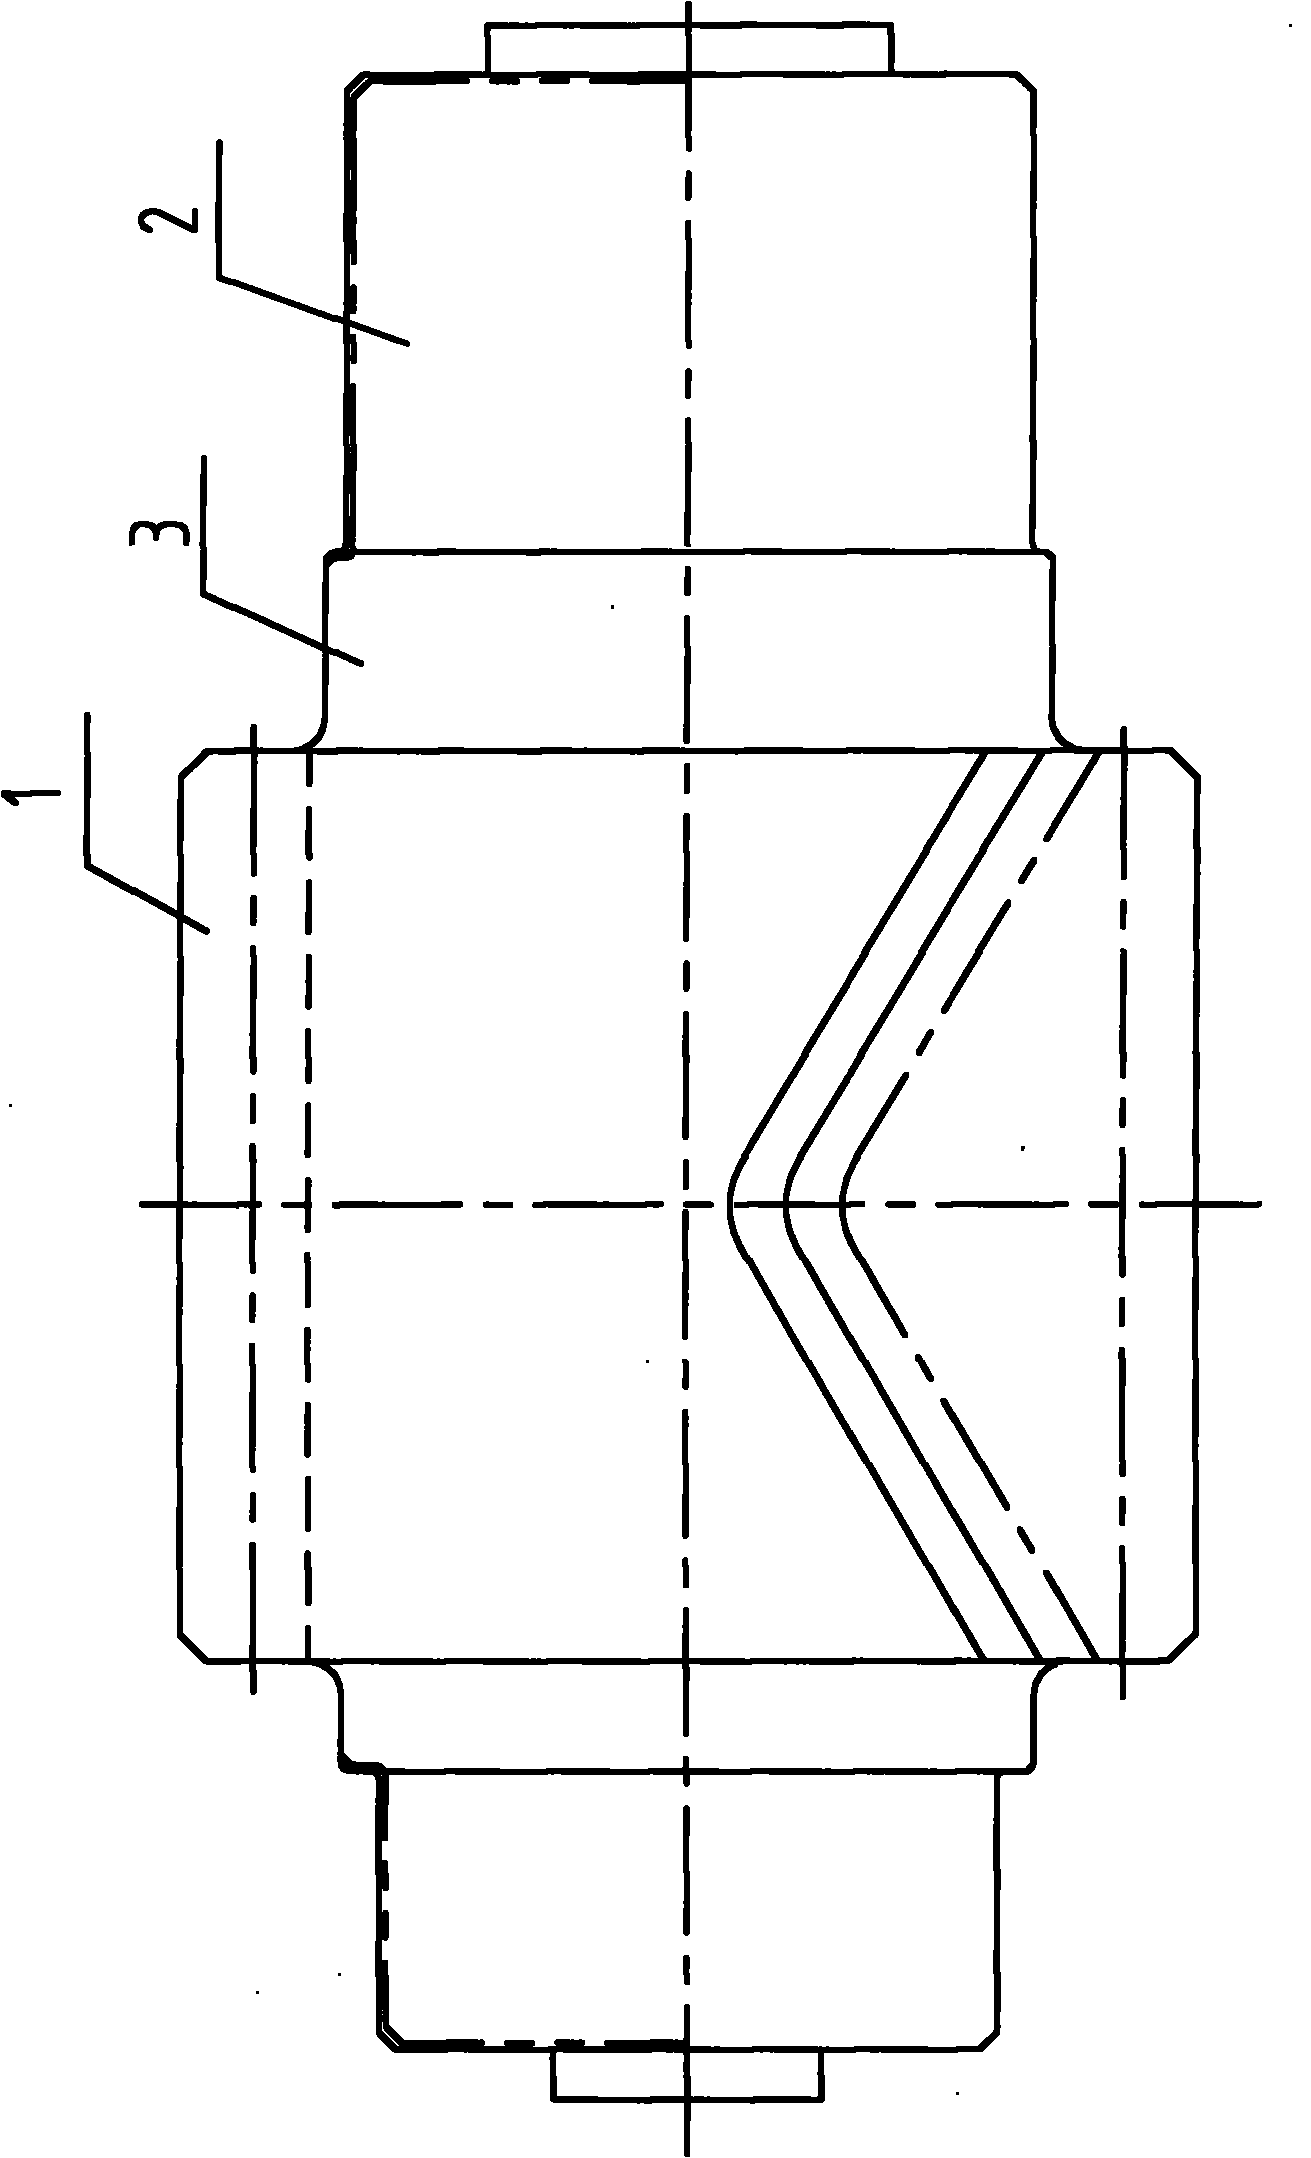 Manufacturing method of integral herringbone gear shaft